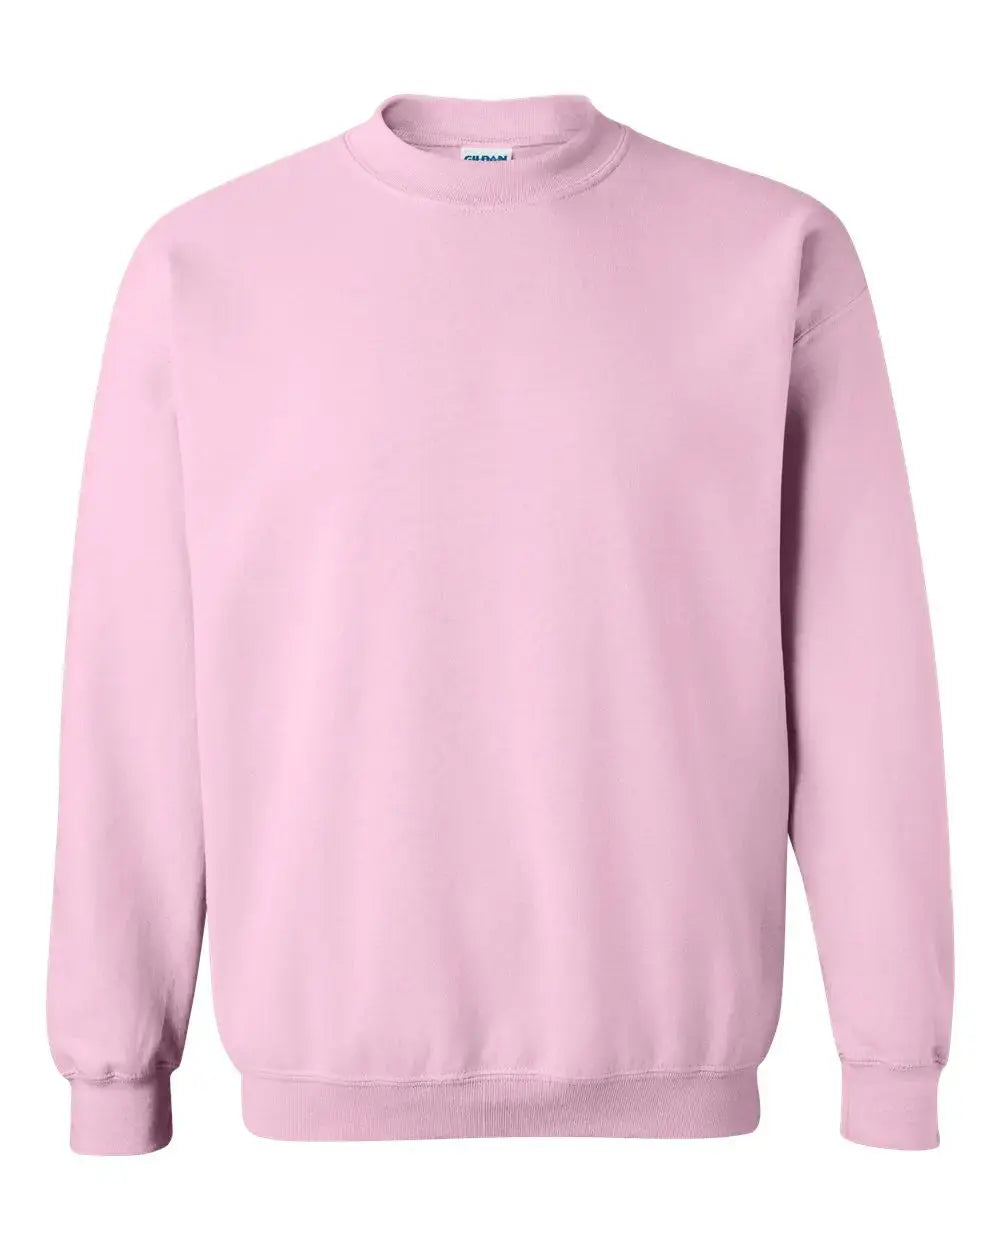 Keepsake Mama Crewneck Sweatshirt, Personalized Embroidered Applique Pink Poodle Designz